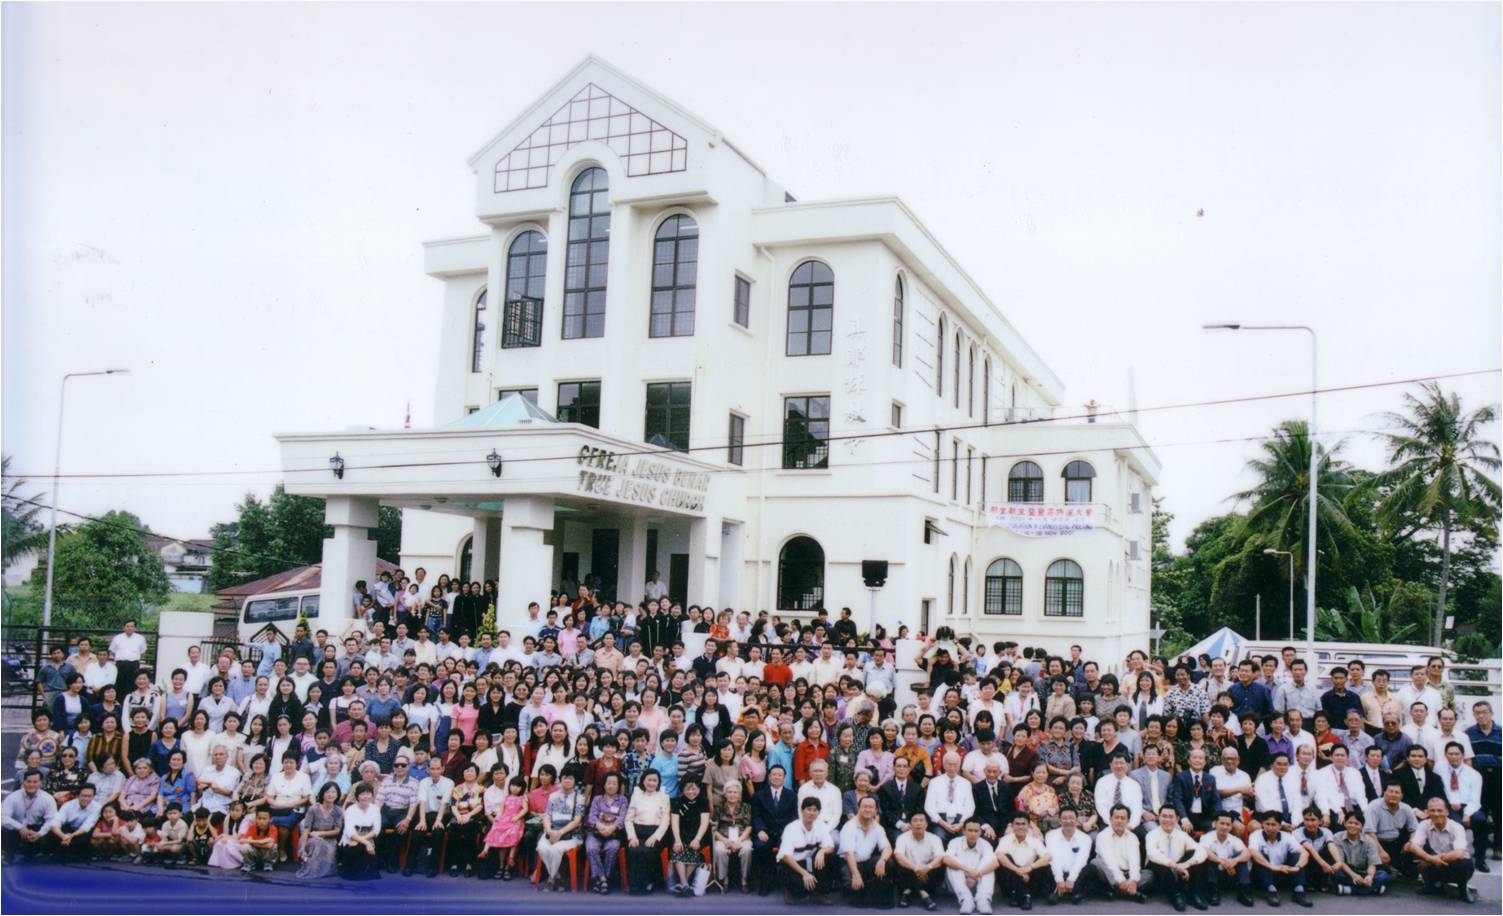 Sungai Petani Church Dedication cum Spiritual Meeting 双溪大年教会献堂礼暨灵恩会